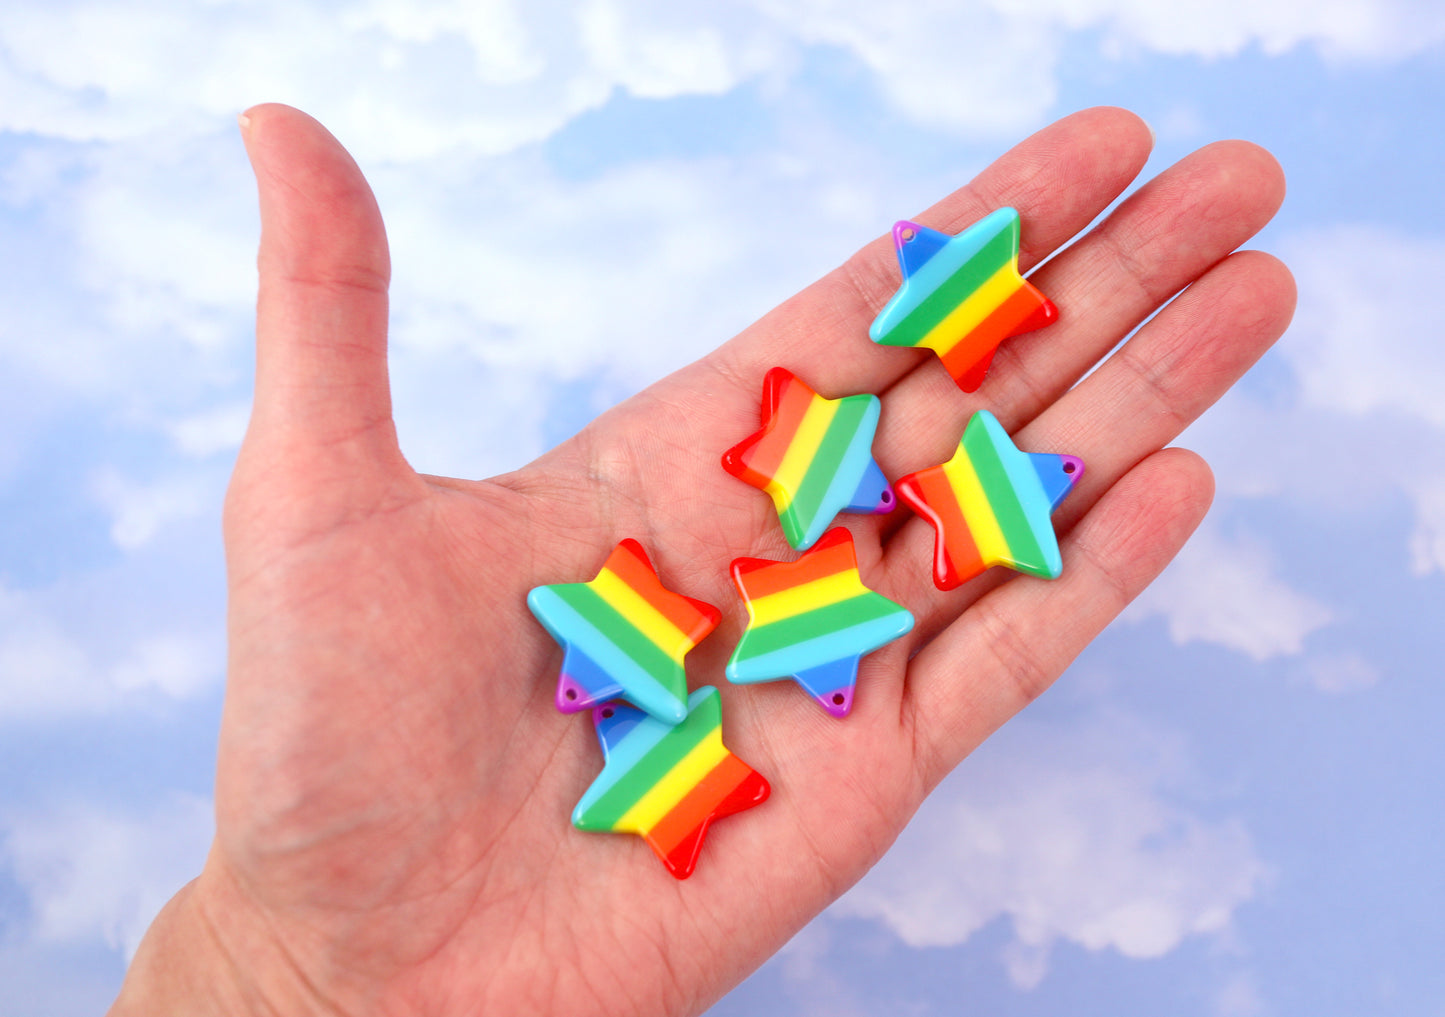 Rainbow Star Charm - 25mm Vibrant Rainbow Stripe Star Resin Charms or Pendants - 6 pc set